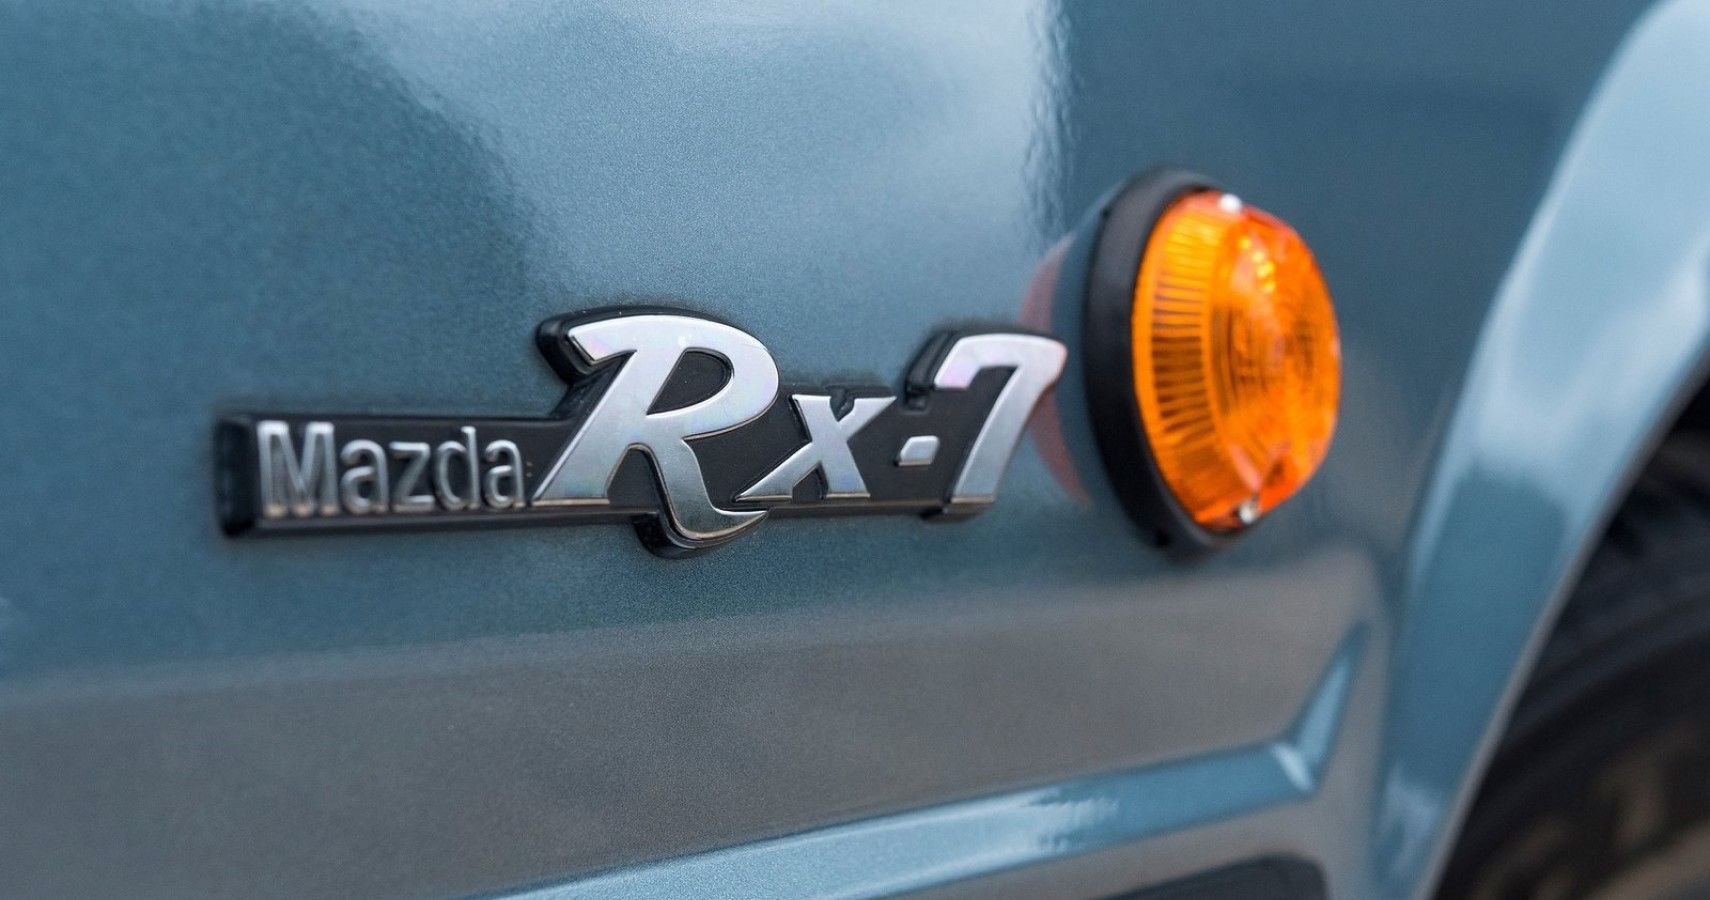 Mazda RX-7 FB classic badging close-up view